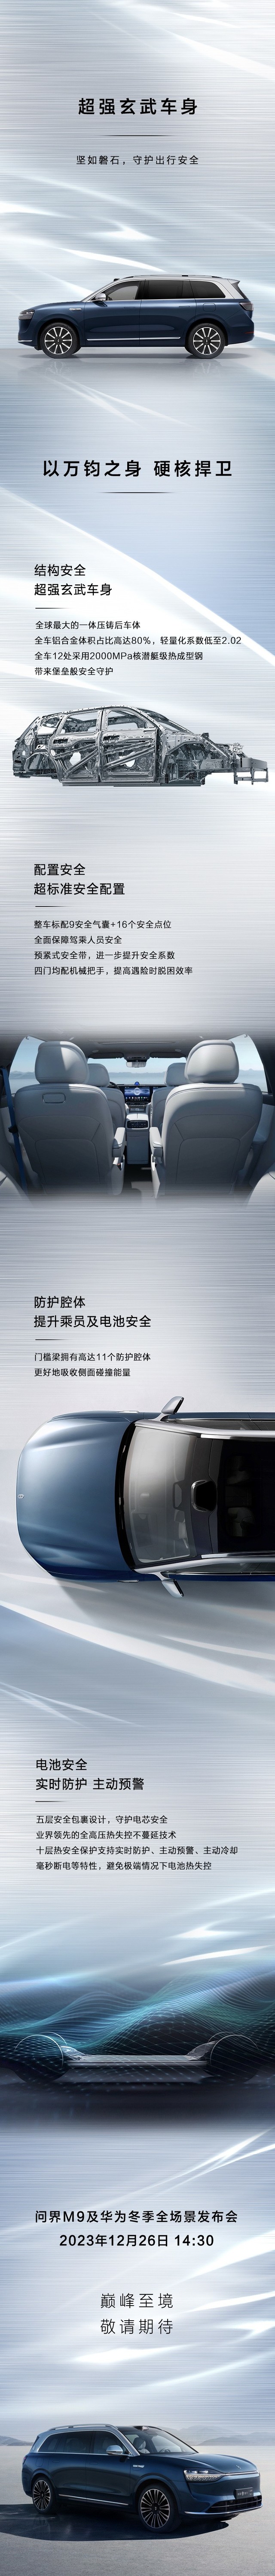 AITO 问界 M9 采用全球最大的一体压铸后车体“玄武车身”